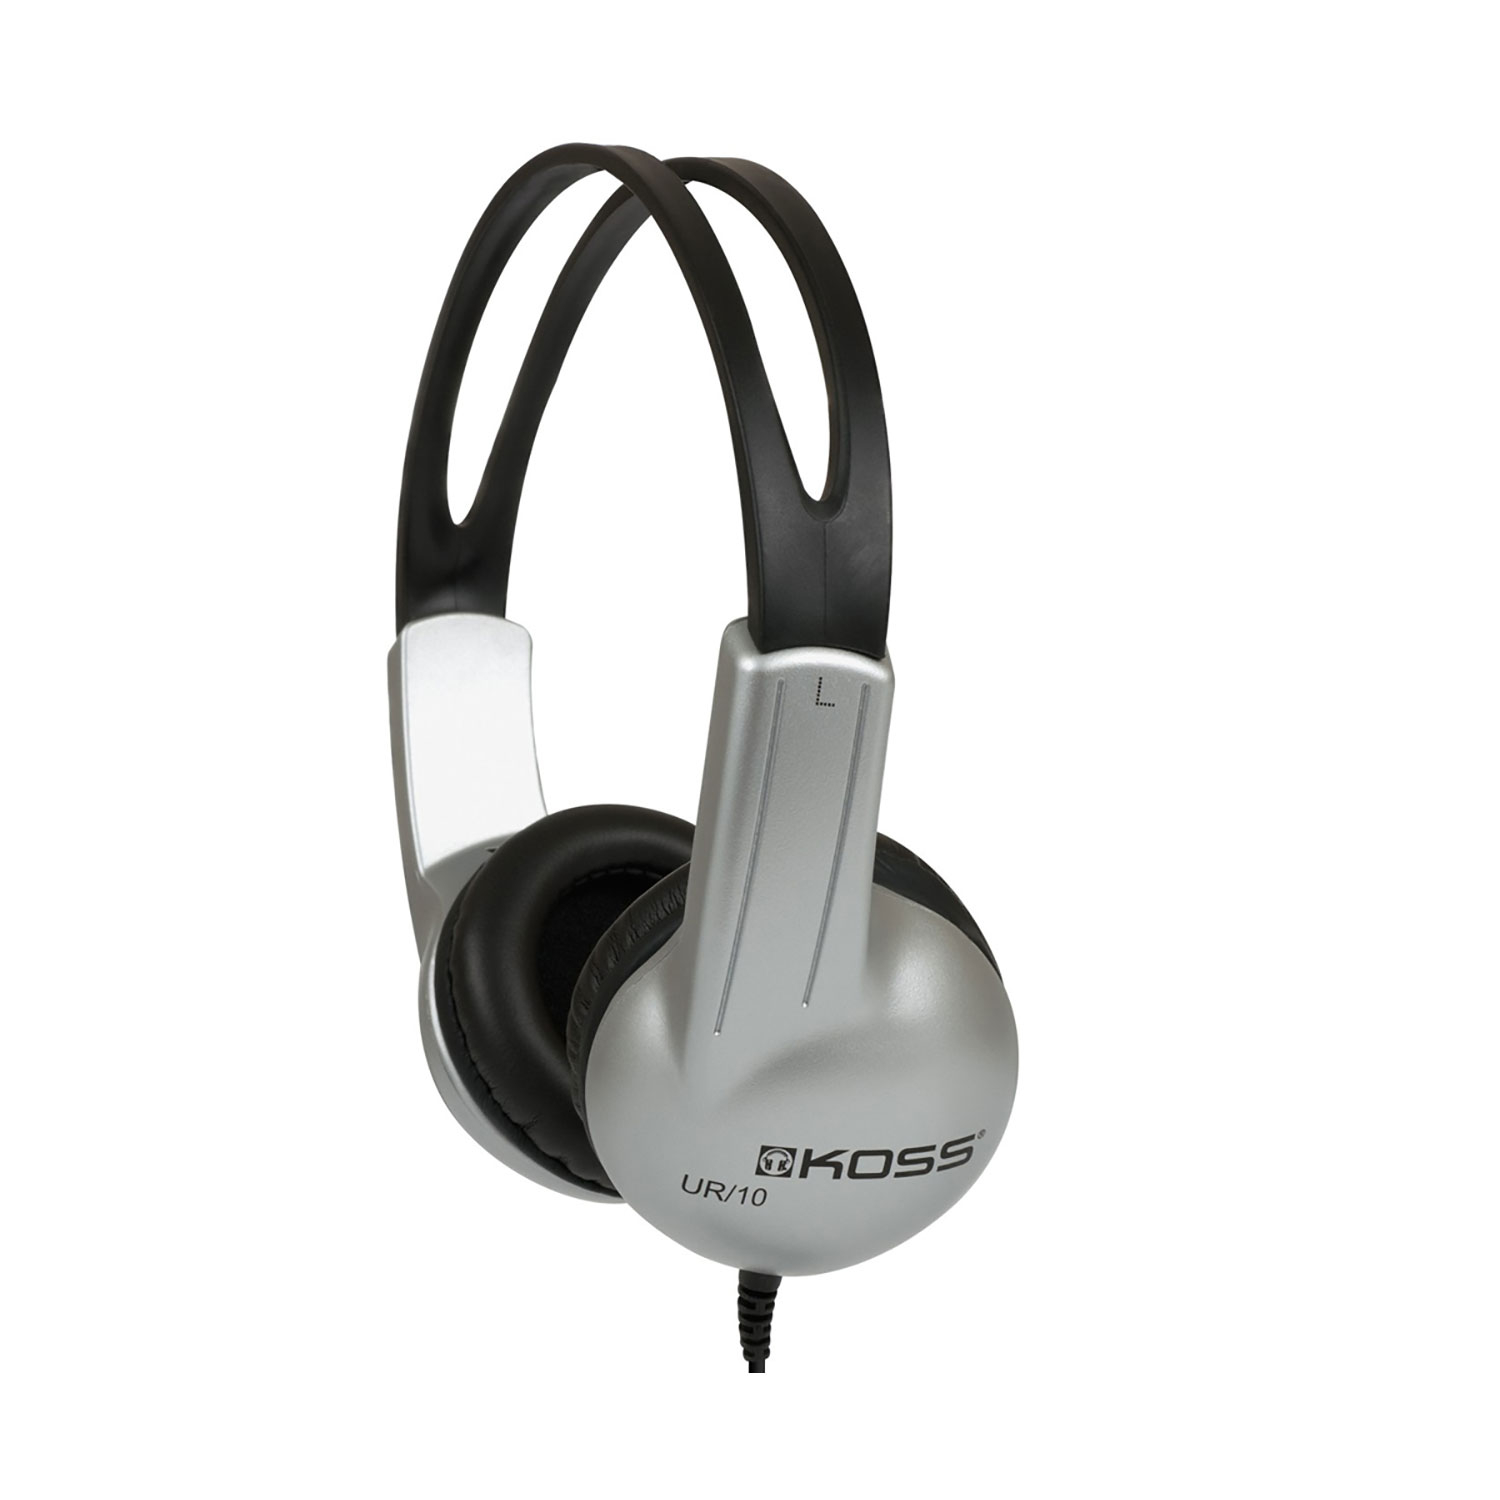 https://www.electroactiva.com/media/catalog/product/k/o/koss-ur10-auriculares-con-cable-on-ear-headphones-002.jpg